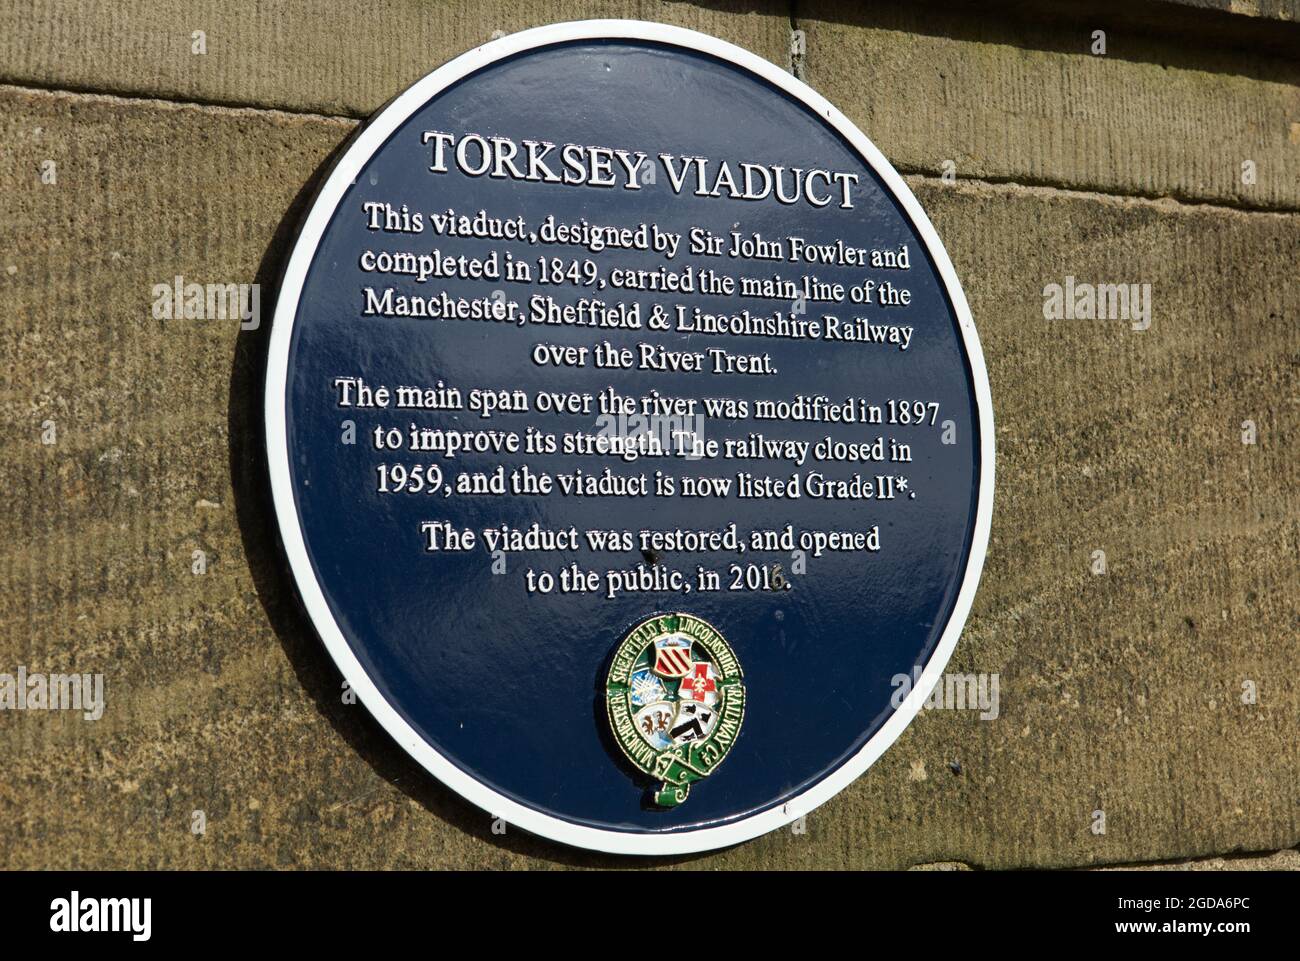 torksey viaduct, commemorative plaque Stock Photo